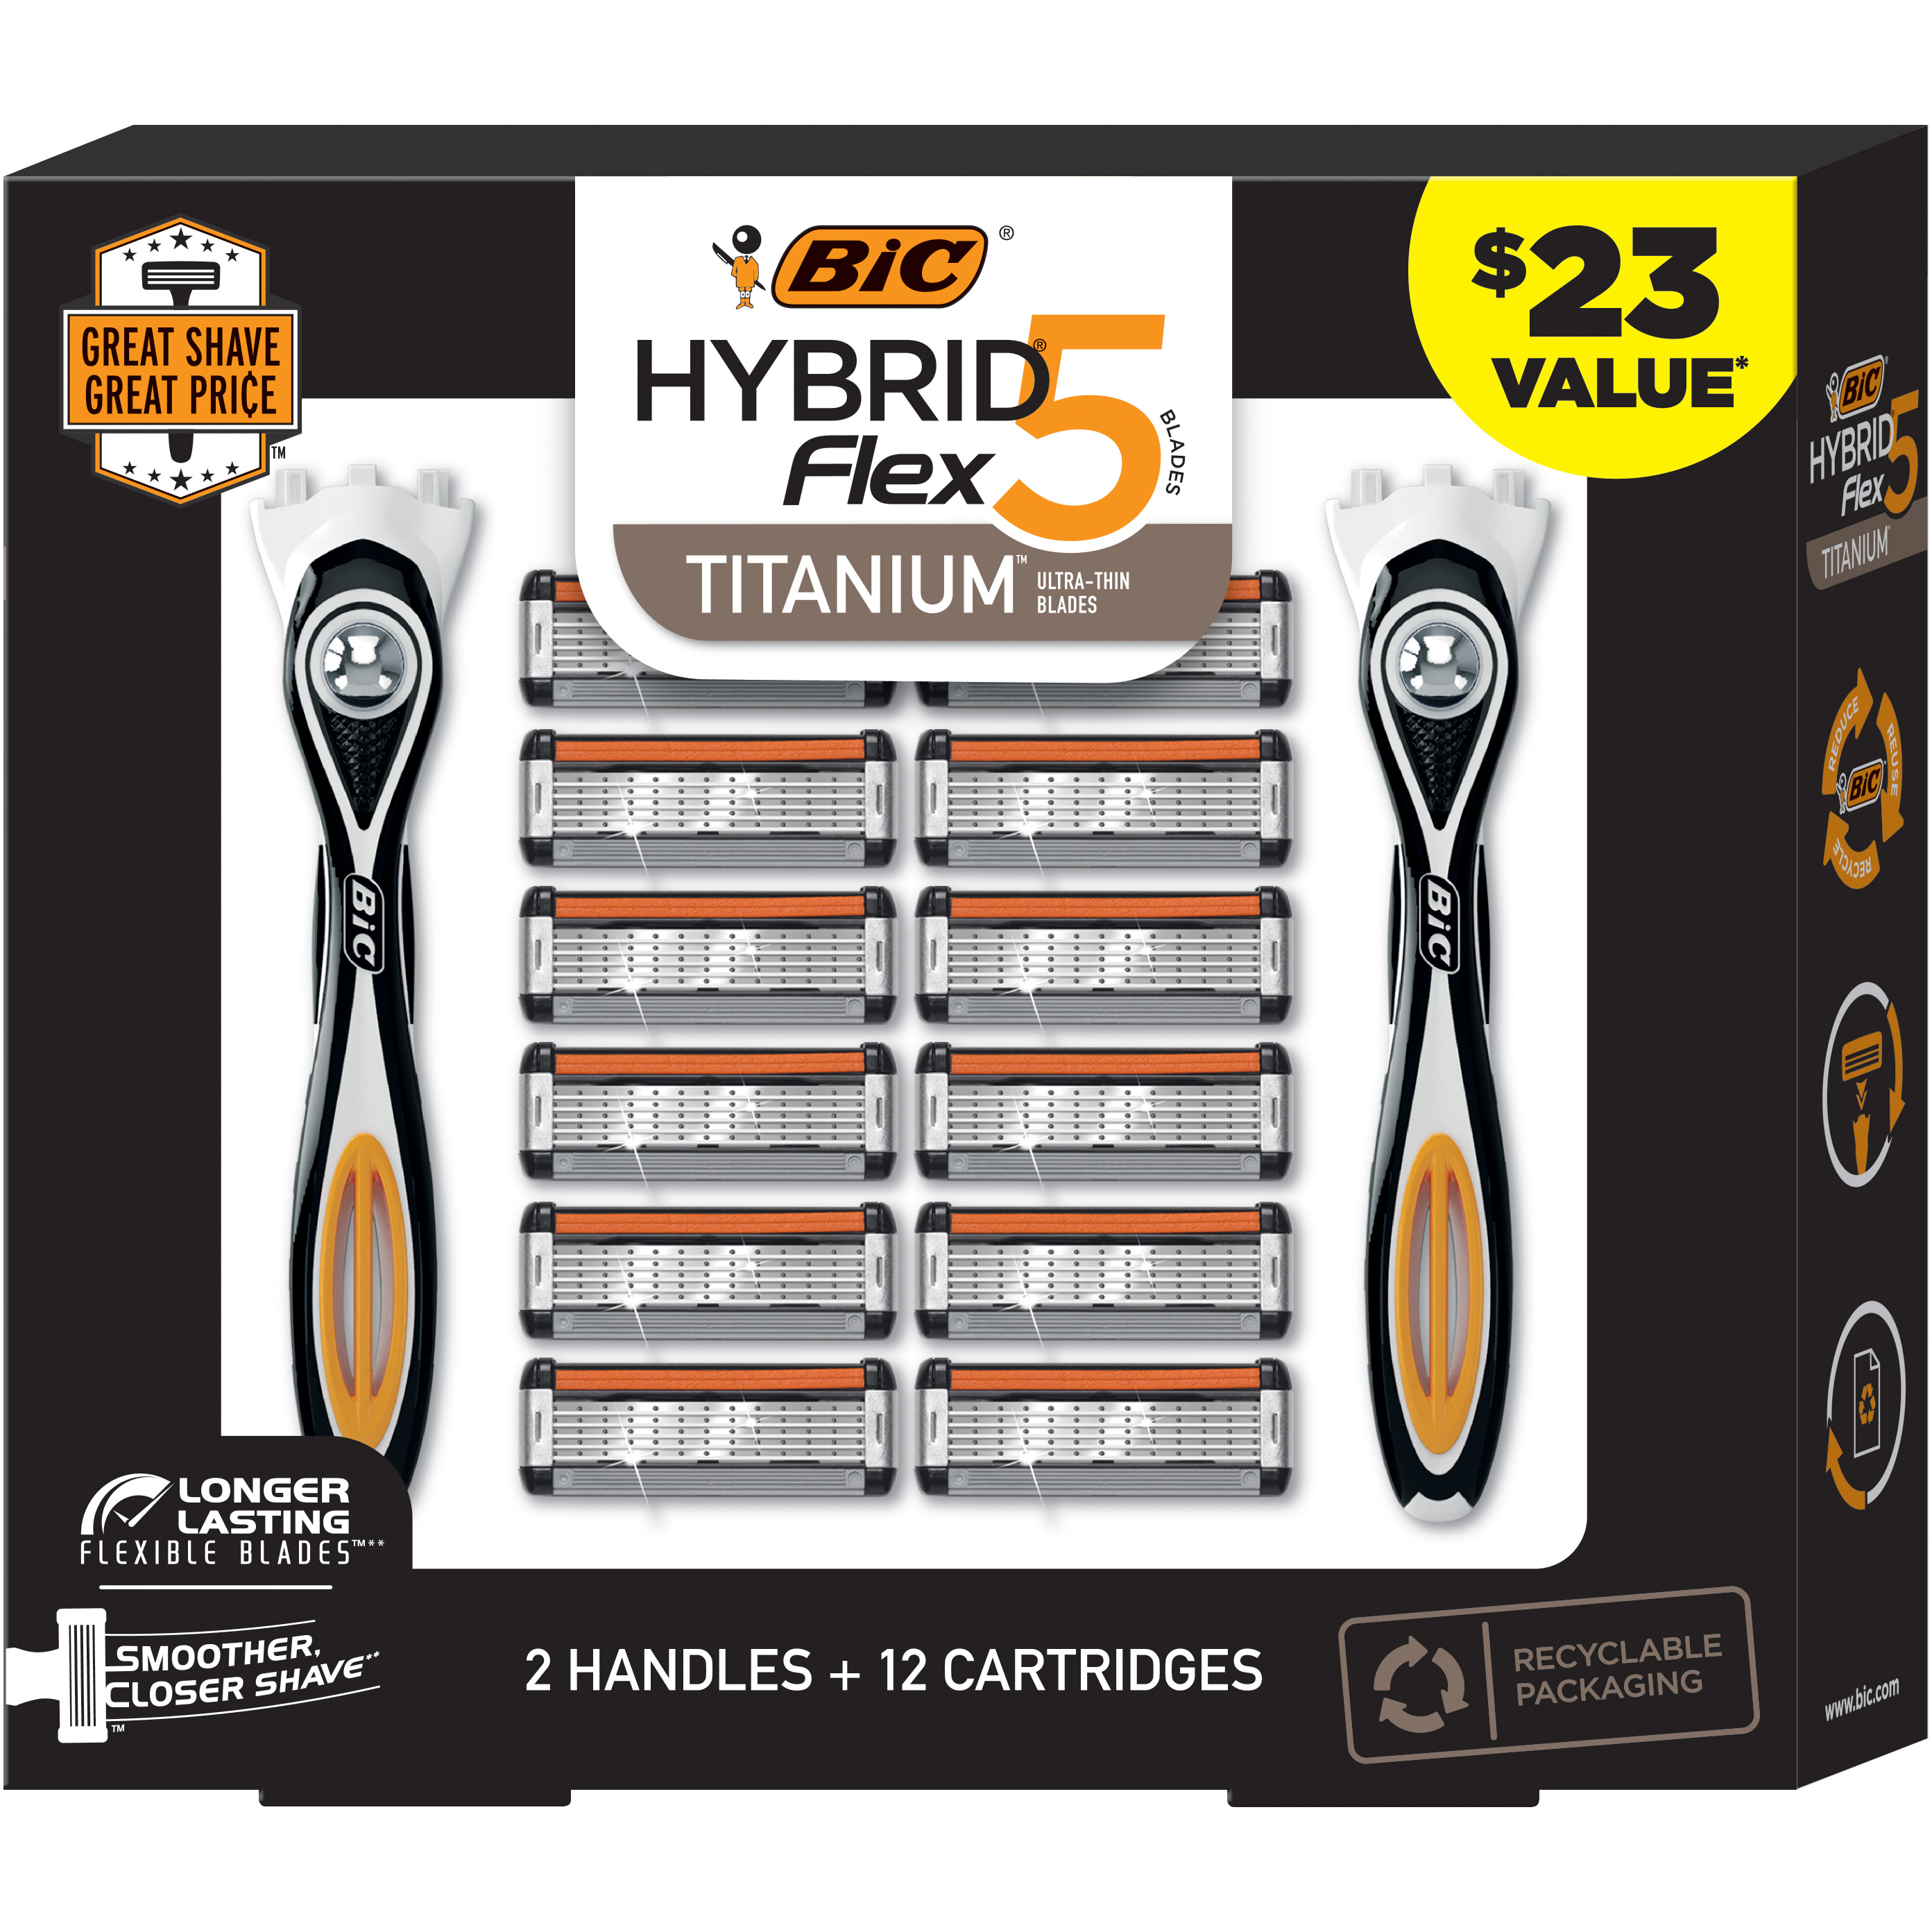 BIC Holiday Men's Gift Set, Hybrid Flex 5, 5 Blade, 2 Handles and 12 Razor Refills - image 1 of 9